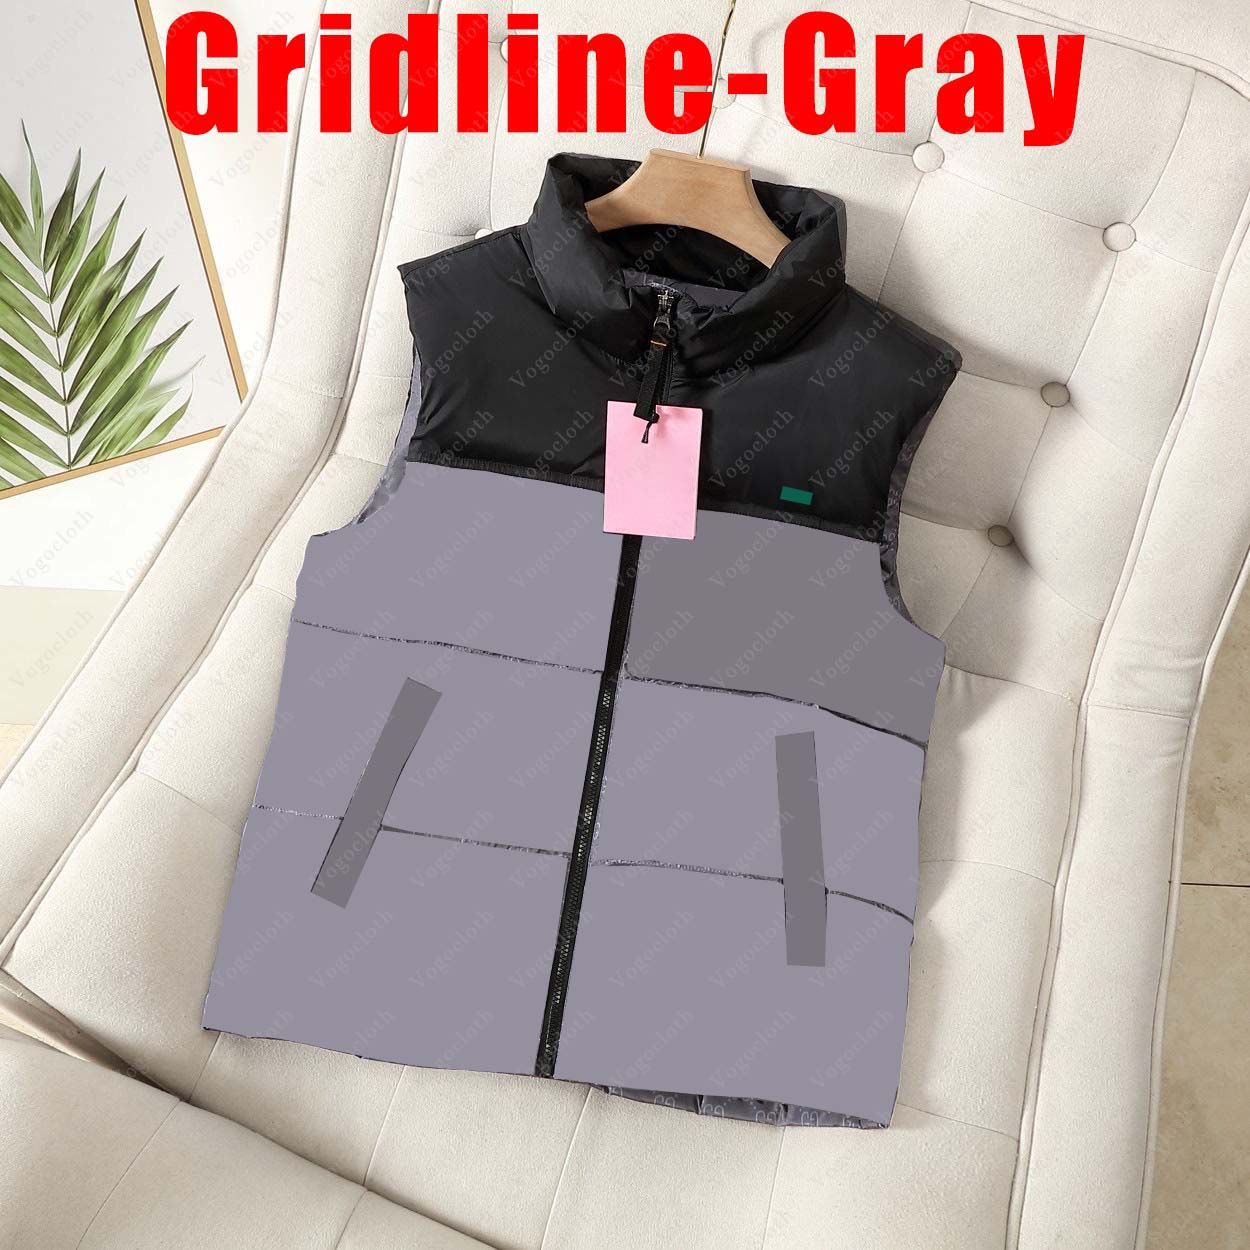 Gridline-Gray.